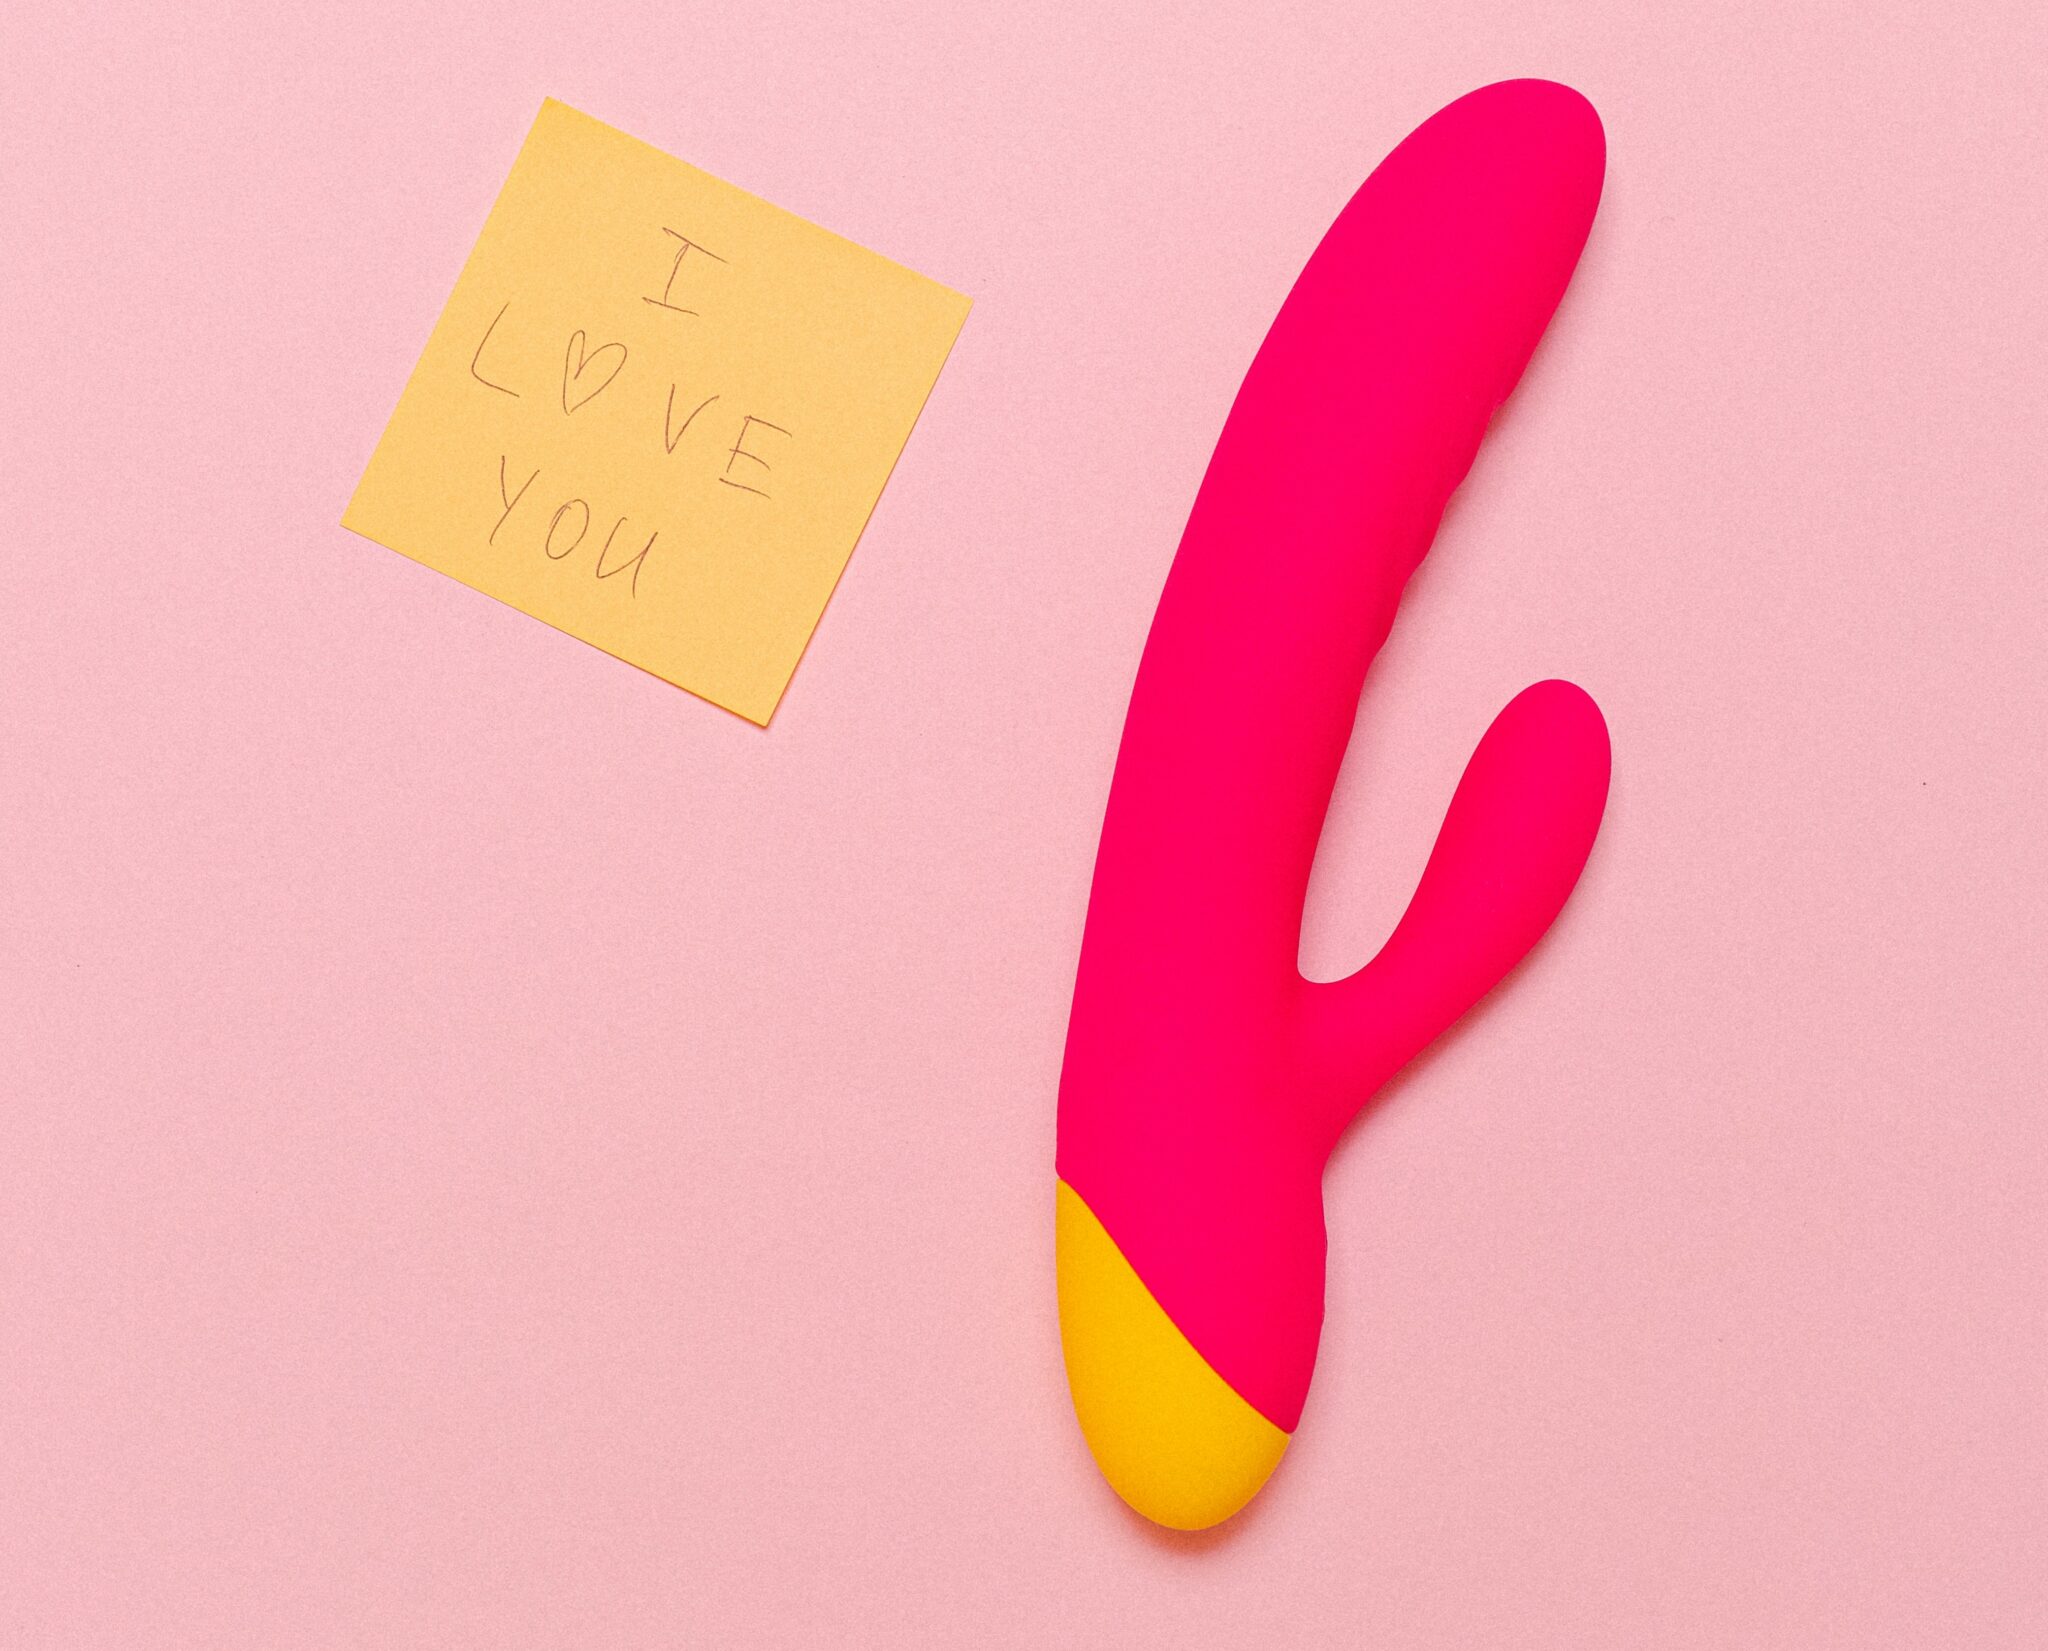 A pink vibrator beside a sticky note saying "I love you"